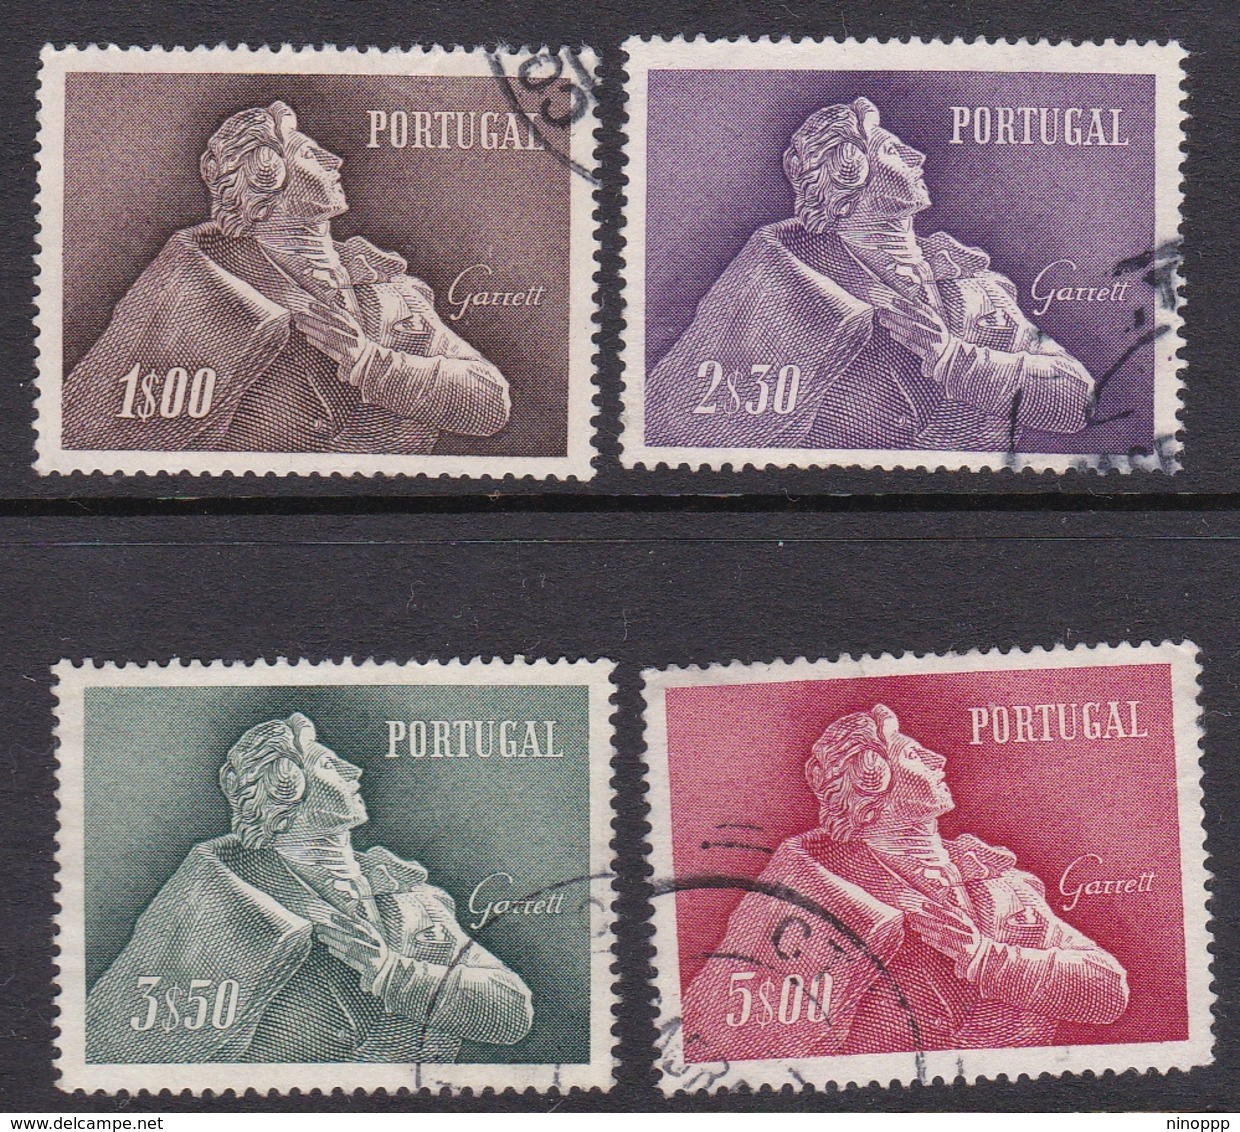 Portugal SG 1142-1145 1957 Almeida Garrett, Used - Used Stamps